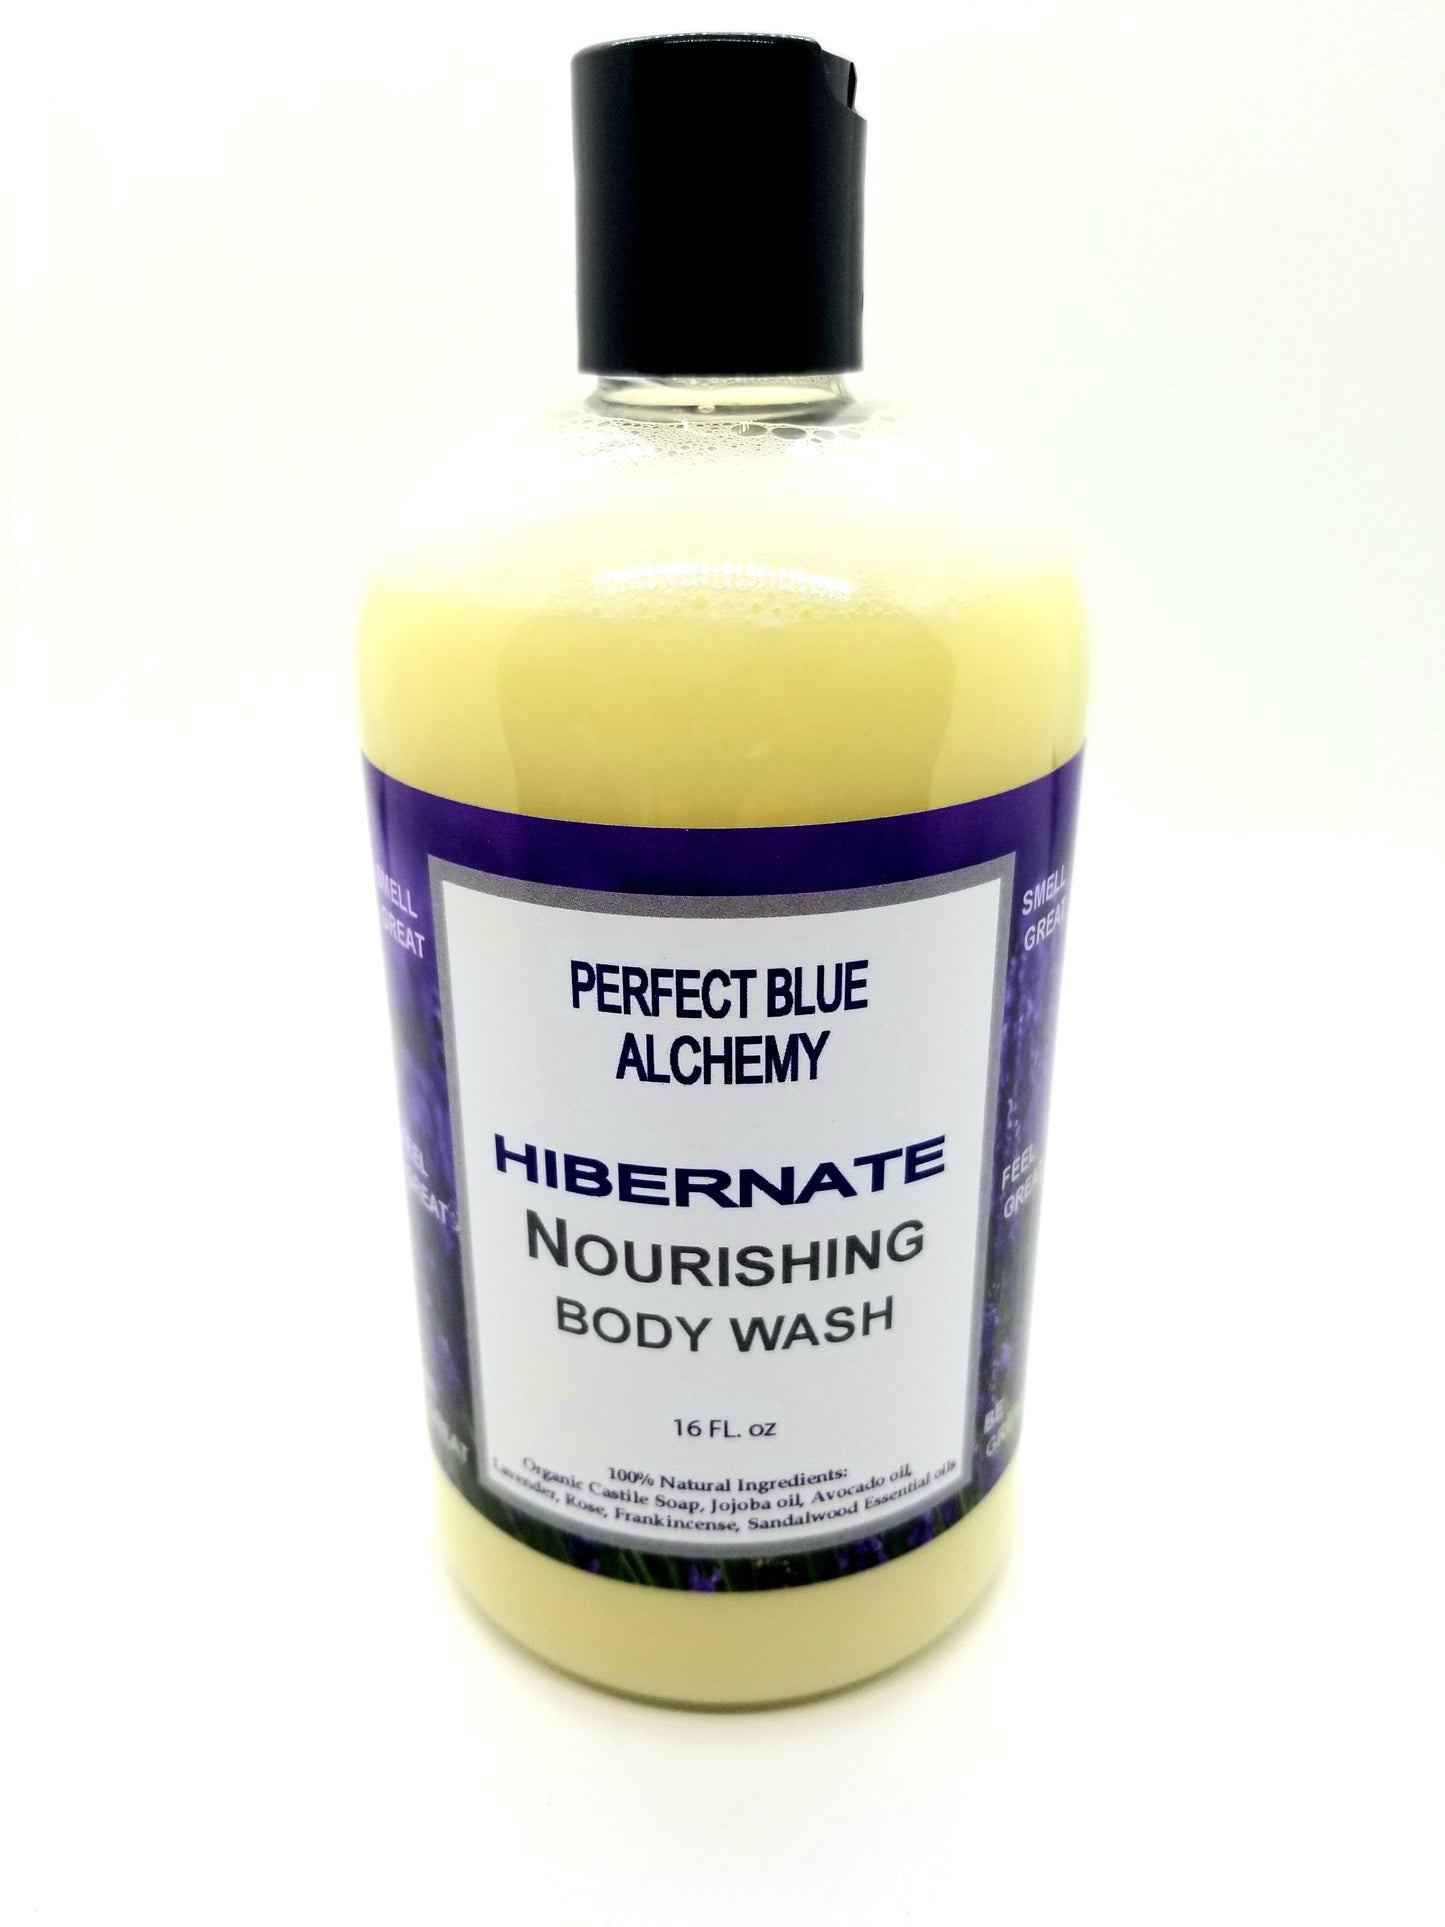 Hibernate Nourishing Body Wash